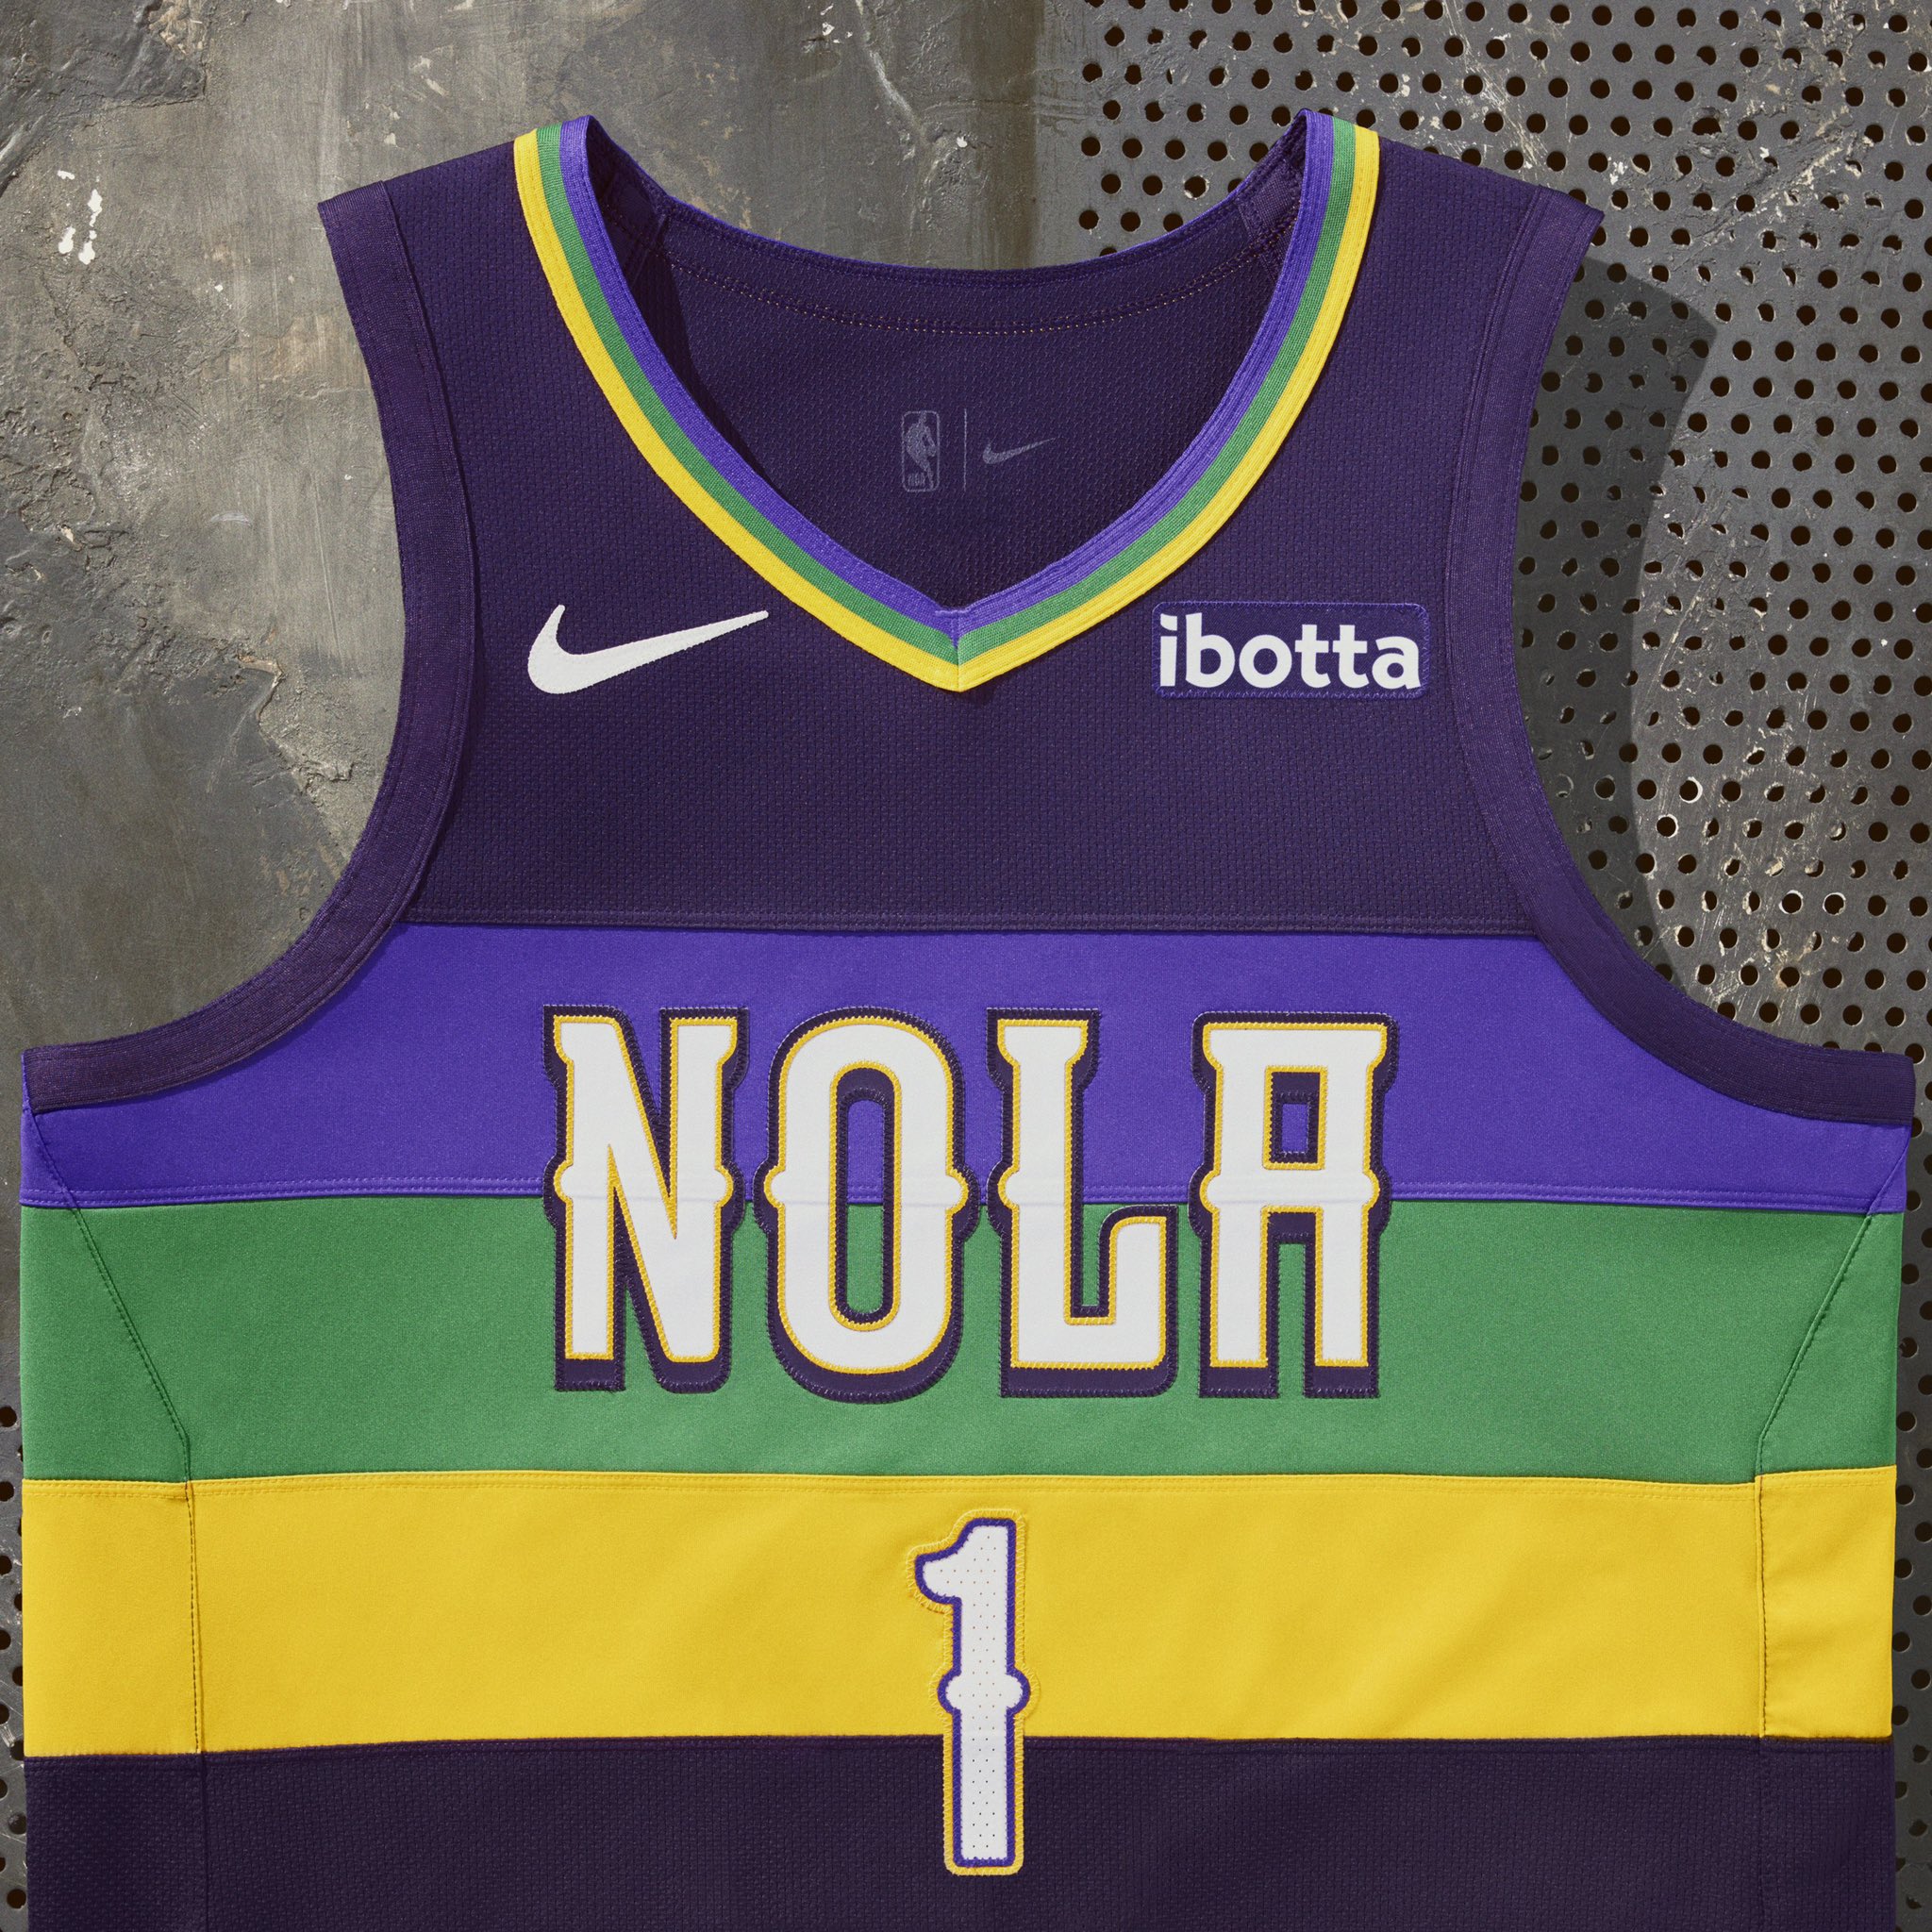 New Orleans Pelicans Purple NBA Jerseys for sale